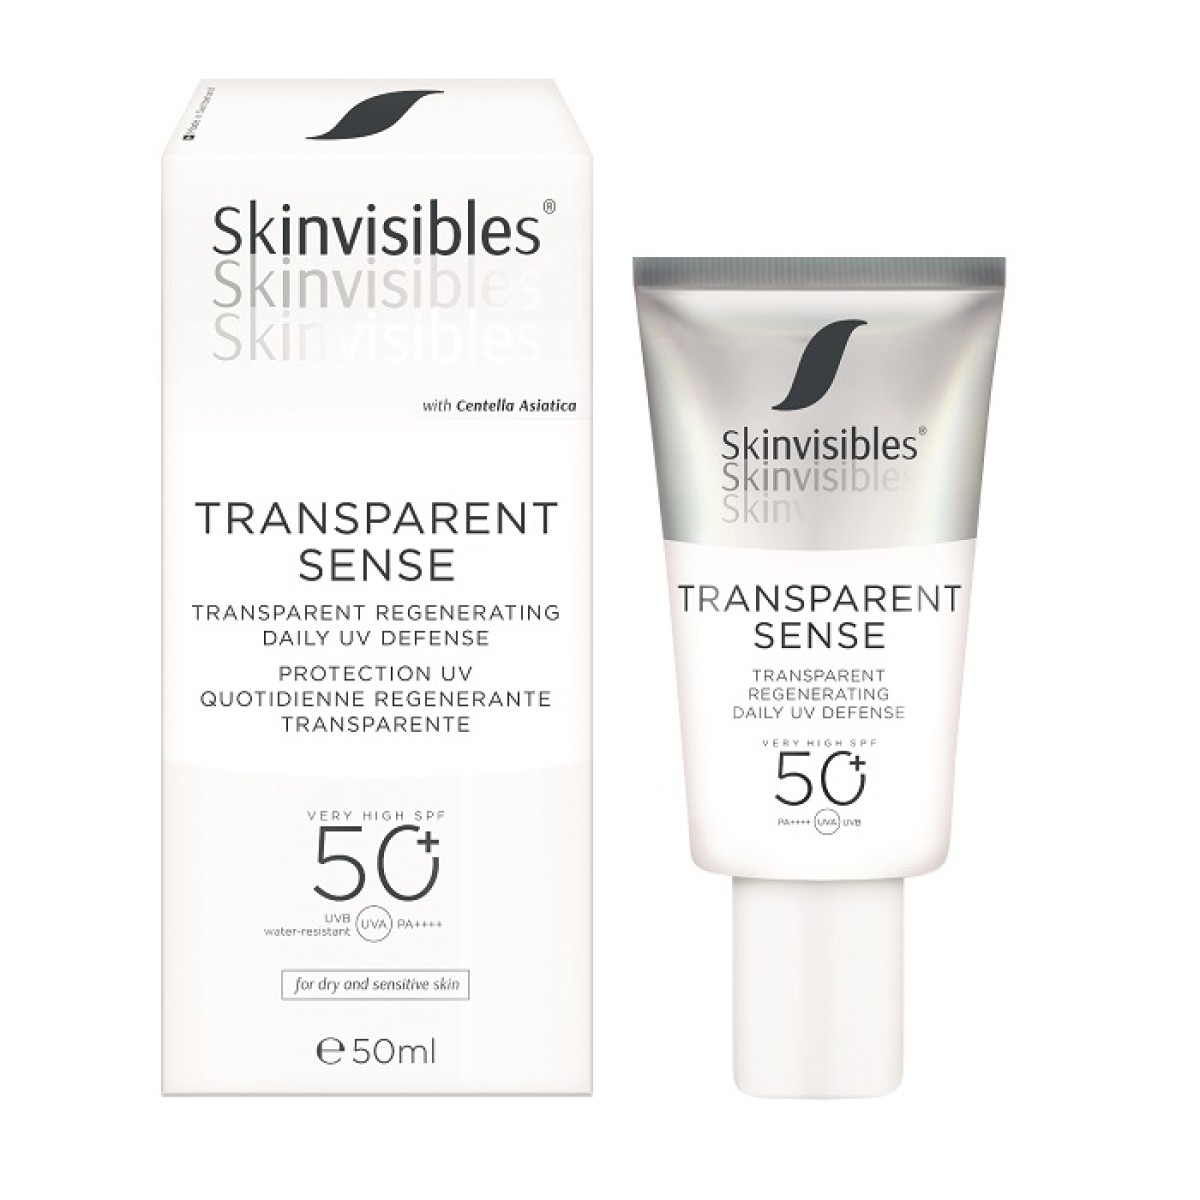 Skinvisibles Transparant Sense SPF50+ 50 ml.